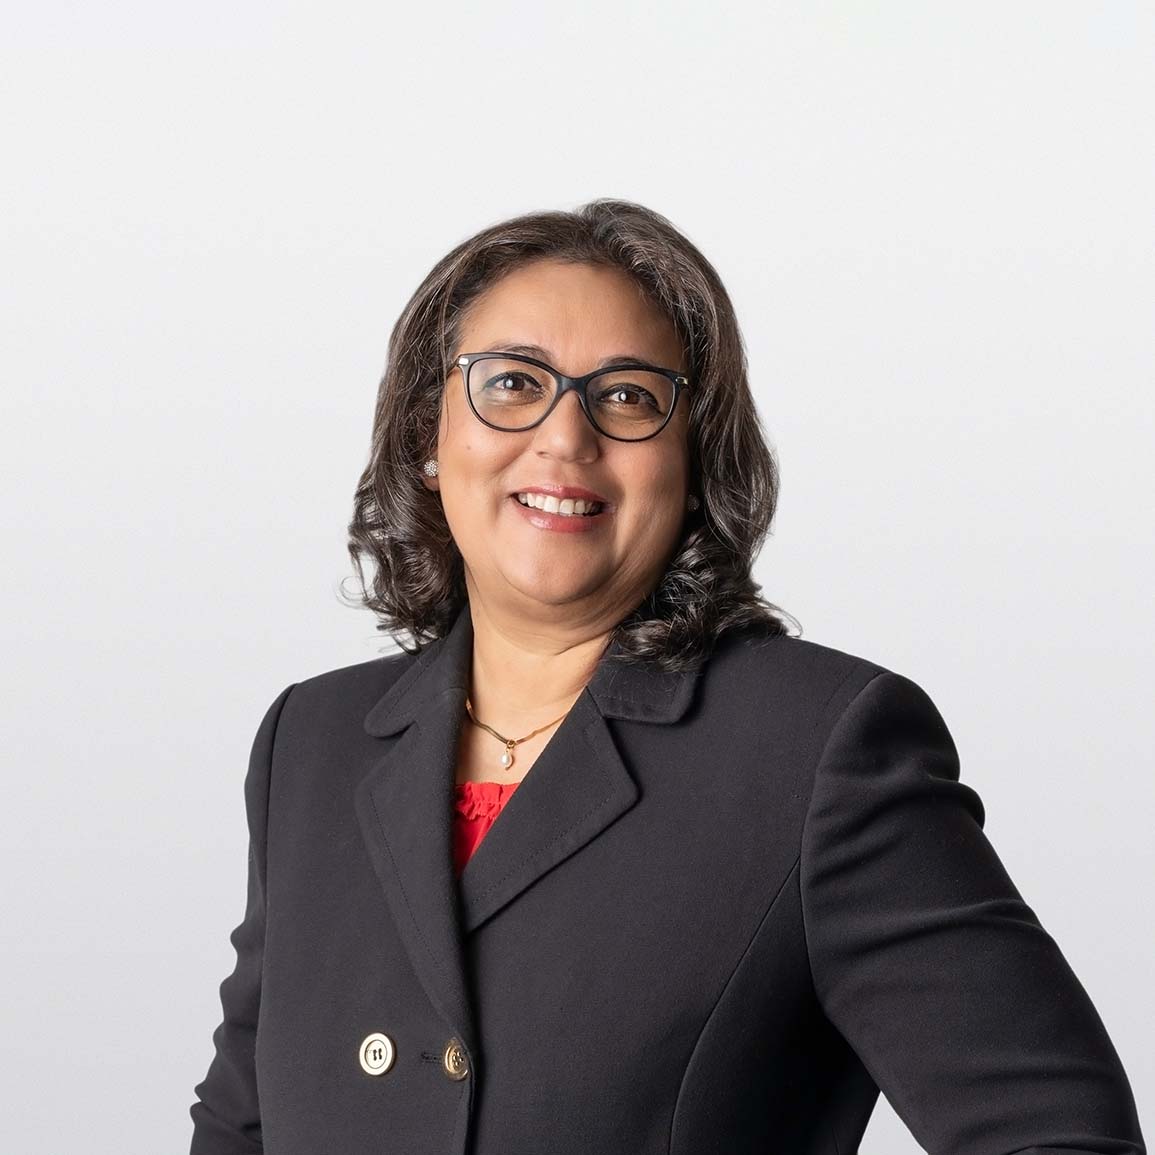 Image of Salma Garde Senior Financial Advisor on white background